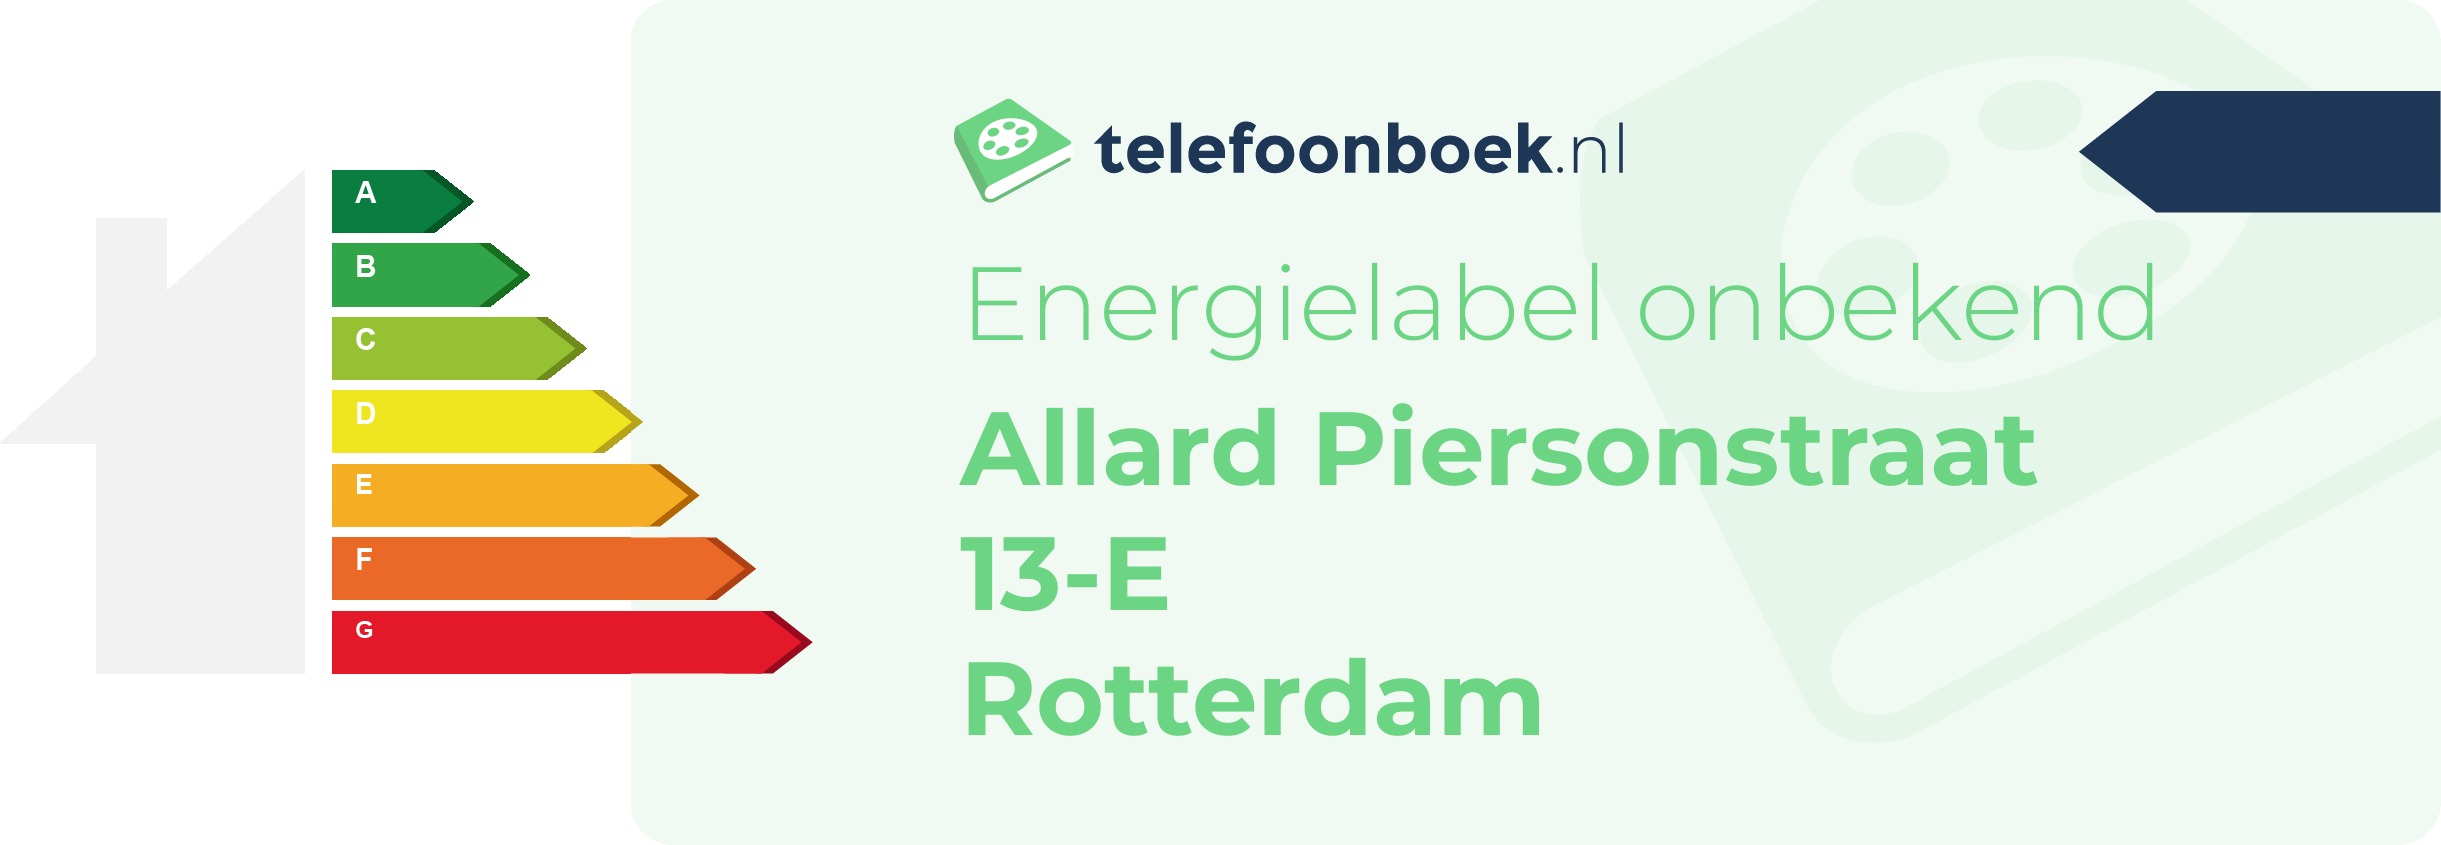 Energielabel Allard Piersonstraat 13-E Rotterdam